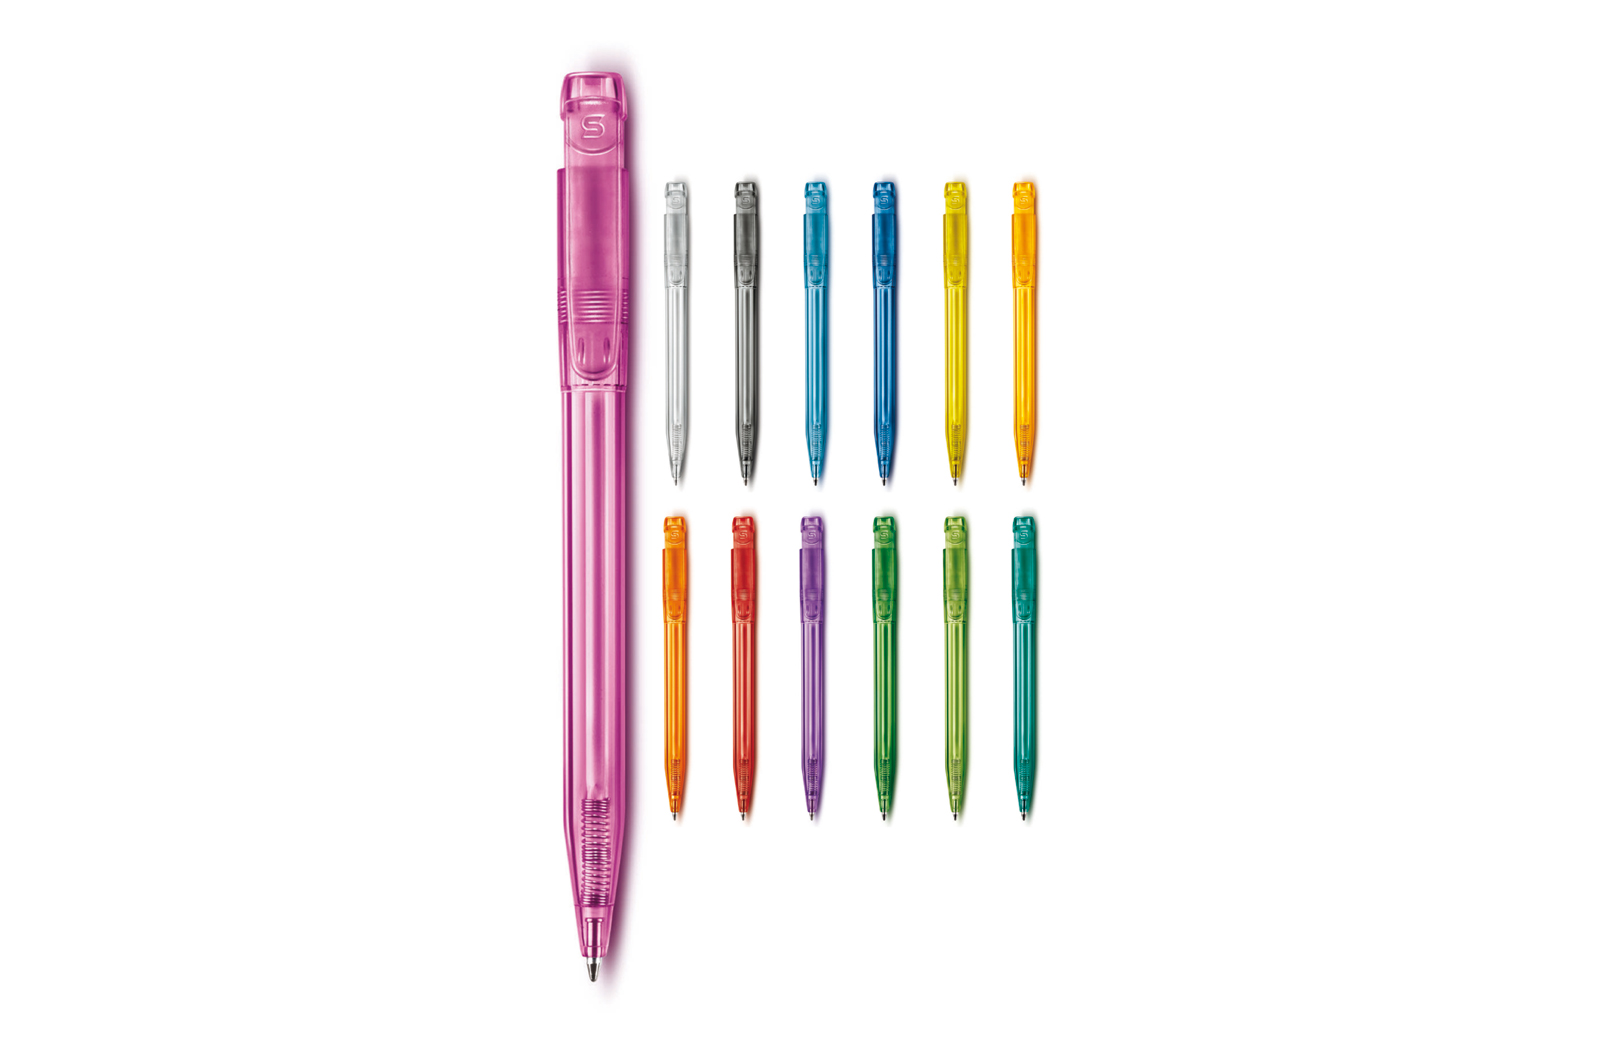 Colored Slim Pen - Nether Stowey - Dedham